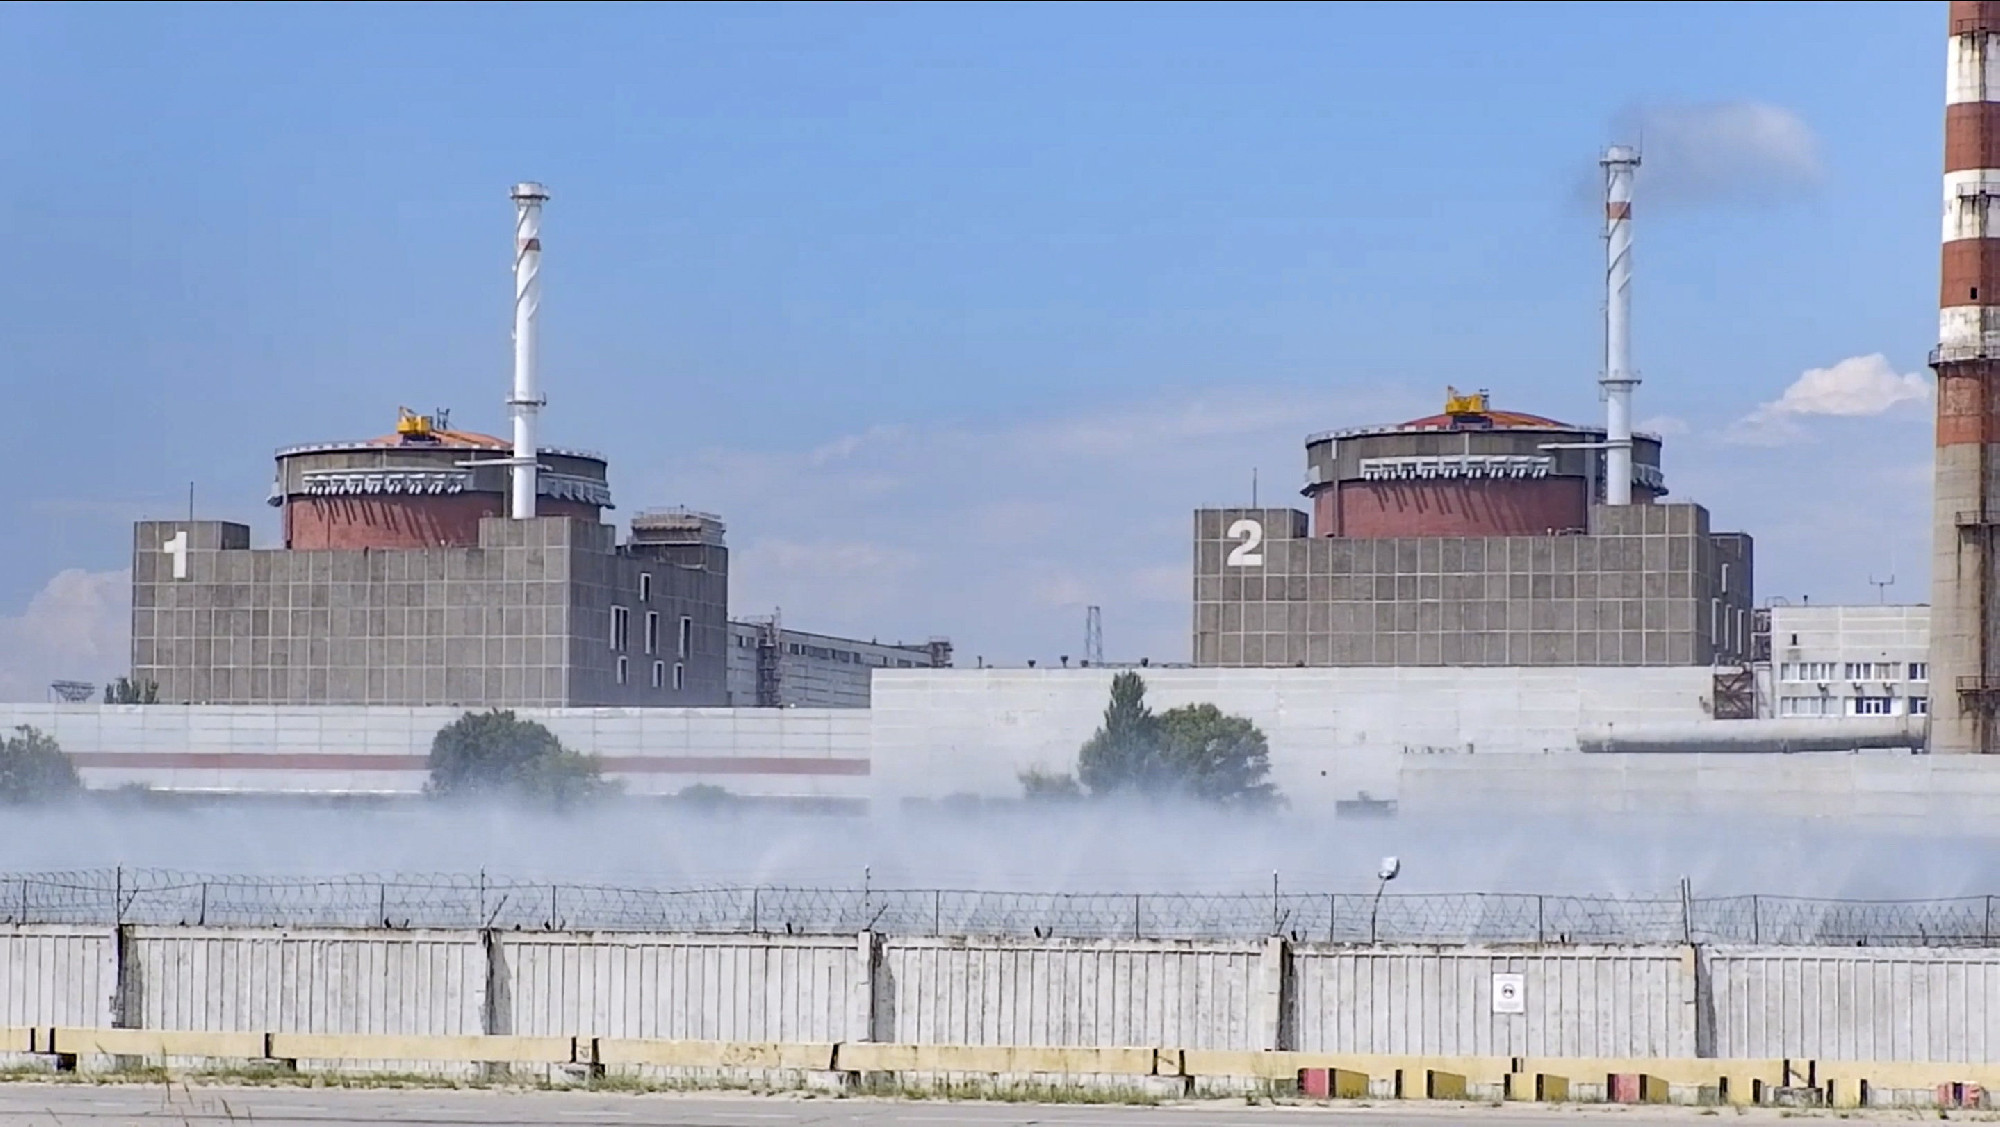 Mindenki a zaporizzsjai atomerőmű miatt aggódik